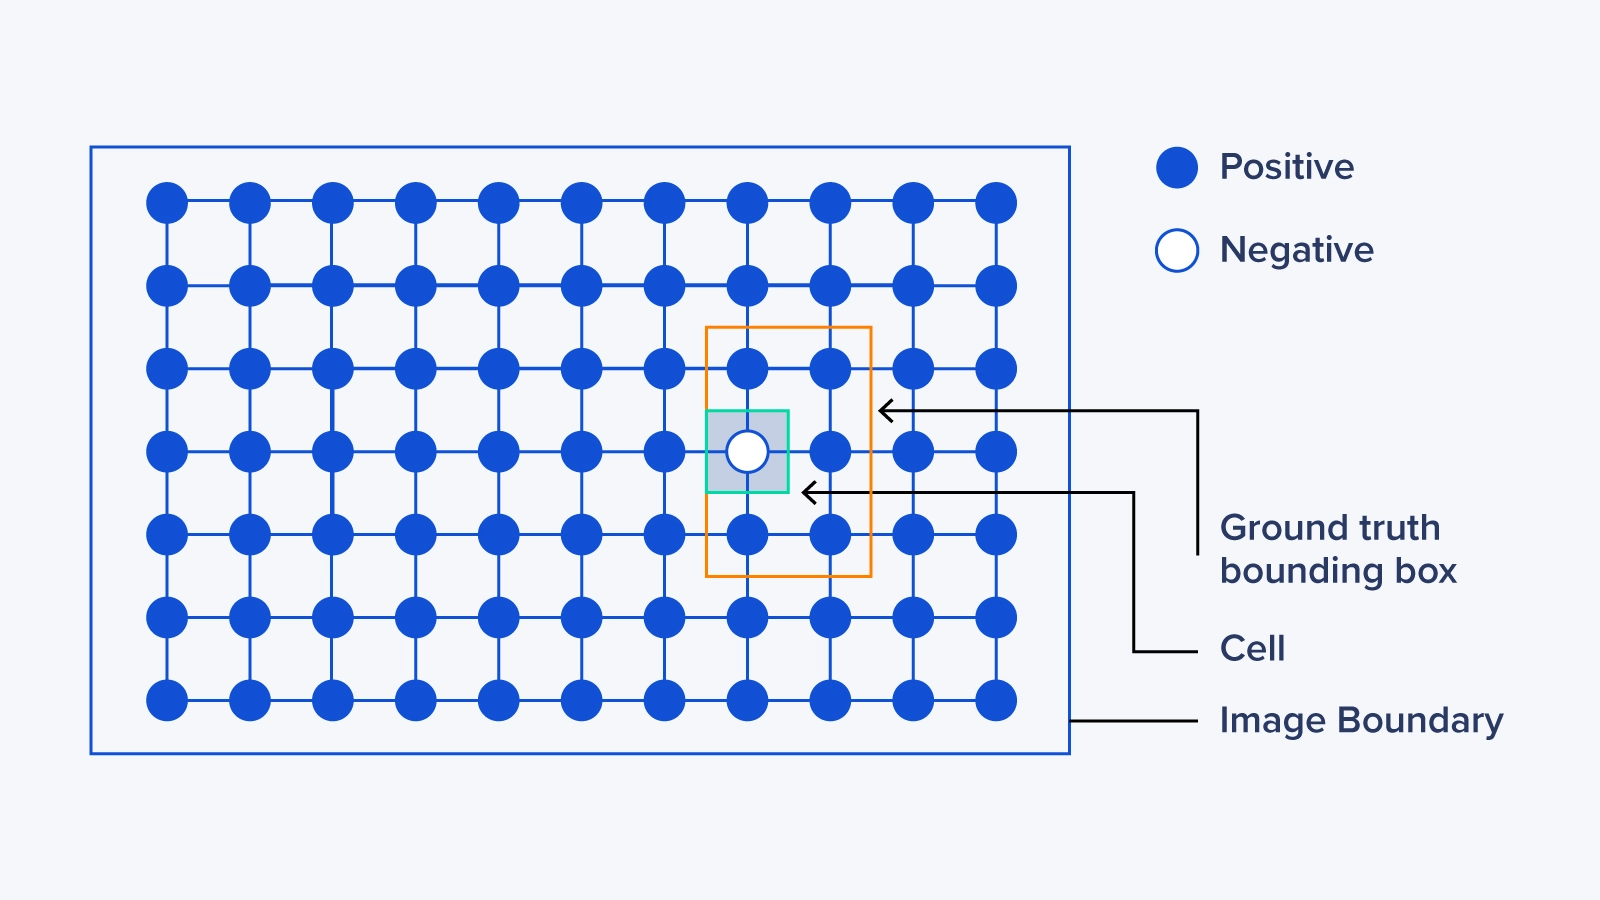 yolov5 algorithm - residual blocks dividing image into a smaller grid-like boxes 